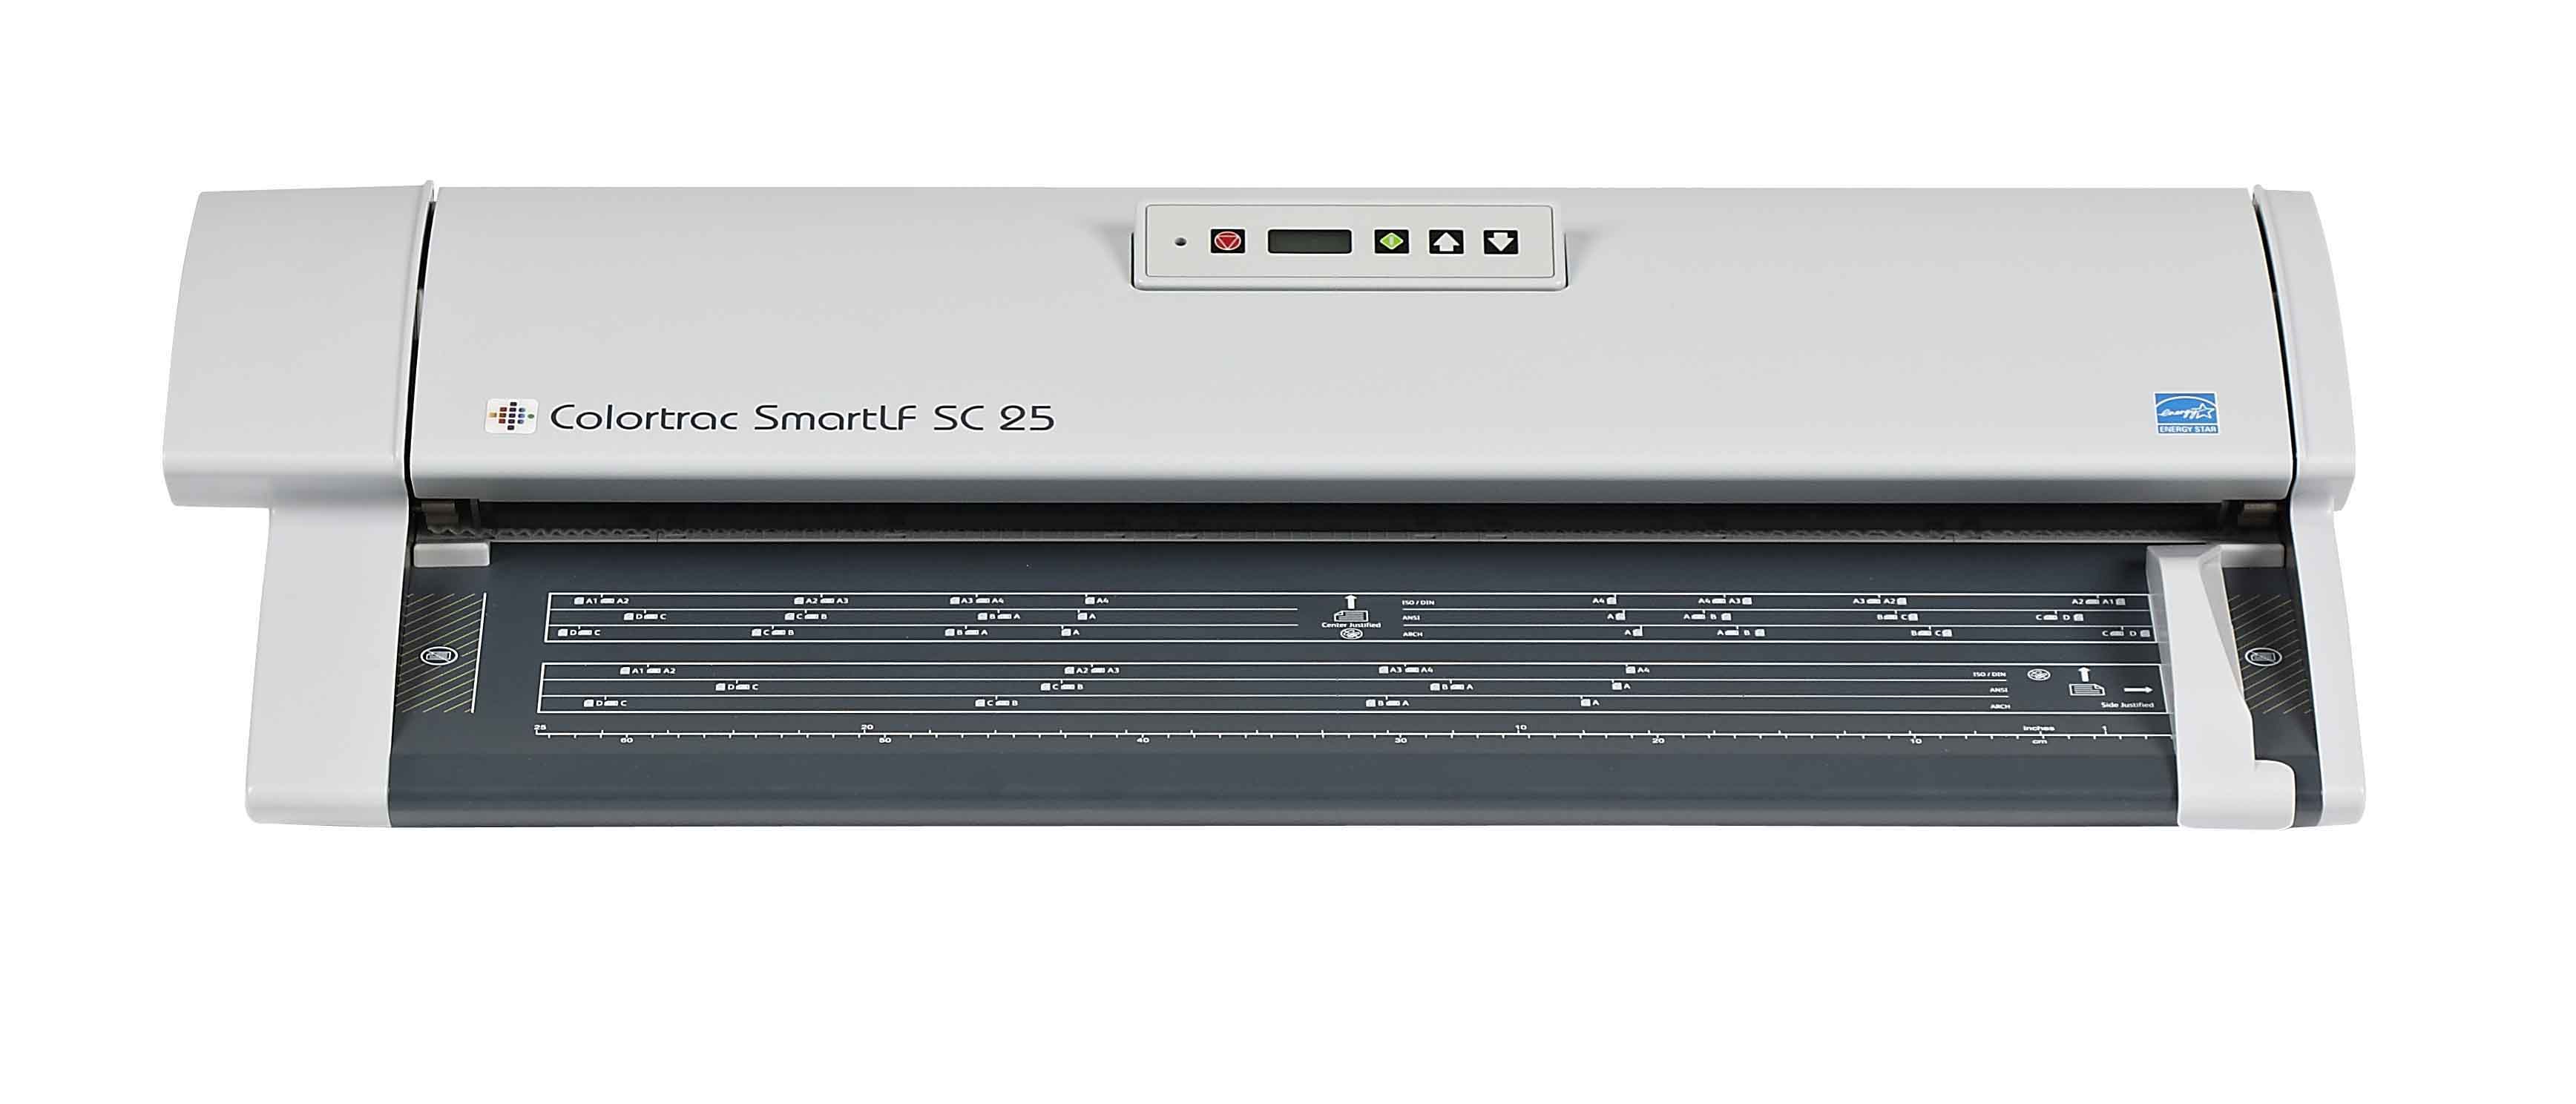 Colortrac SmartLF SC 25m Scanner (01H066)